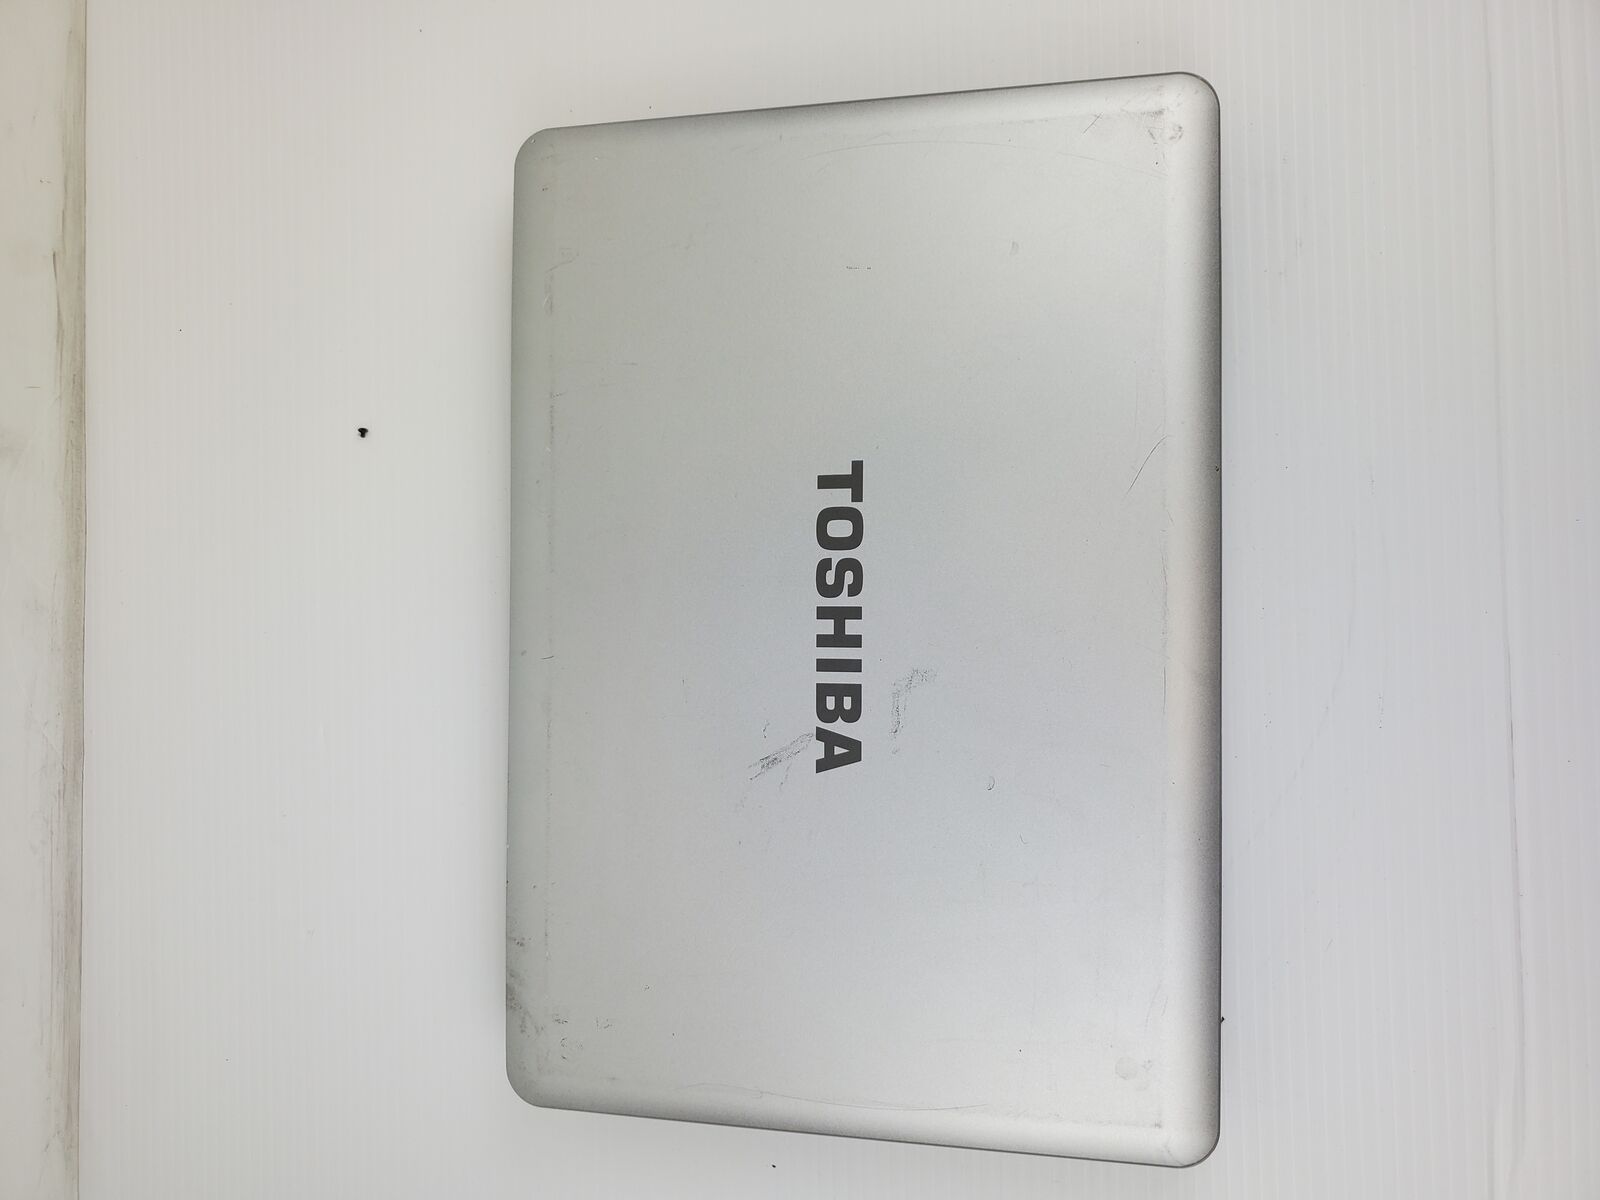 Toshiba Windows 7 Pro OA G66C0002G810 Laptop 00186-048-784-148 - Parts Only